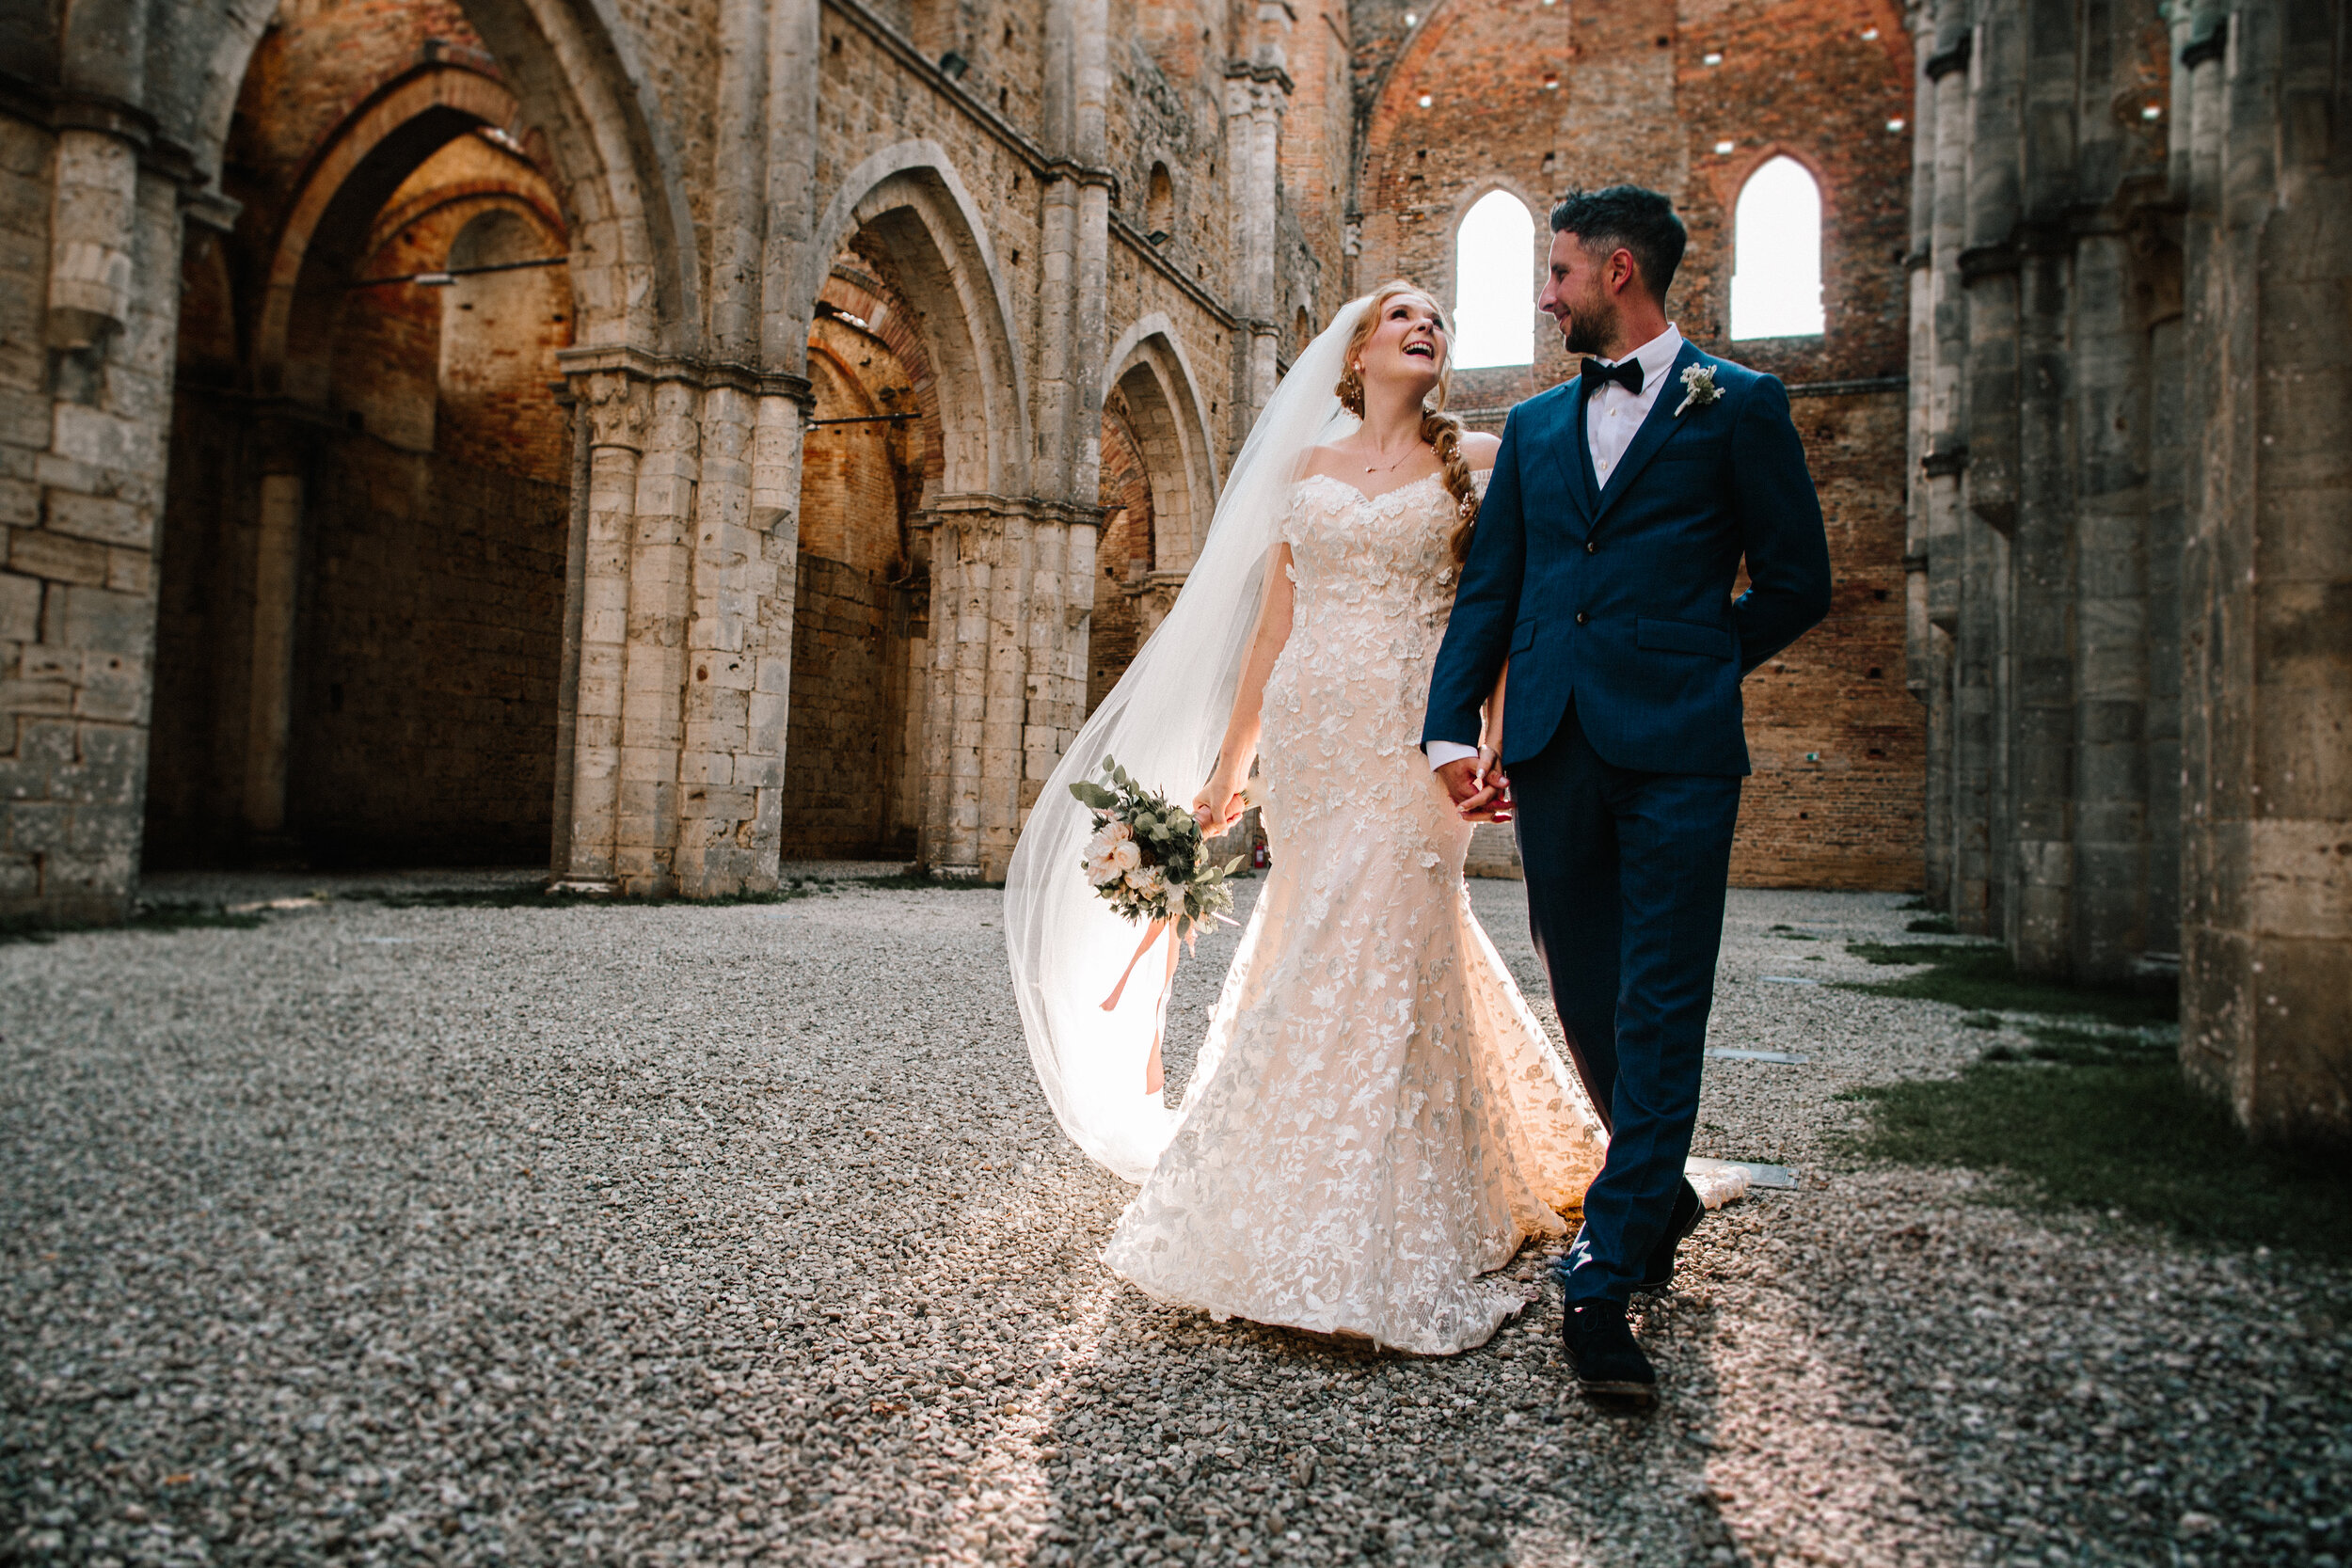 Gemma & Chris San Galgano Wedding in Tuscany by Fresh Shoot Studios -27.jpg